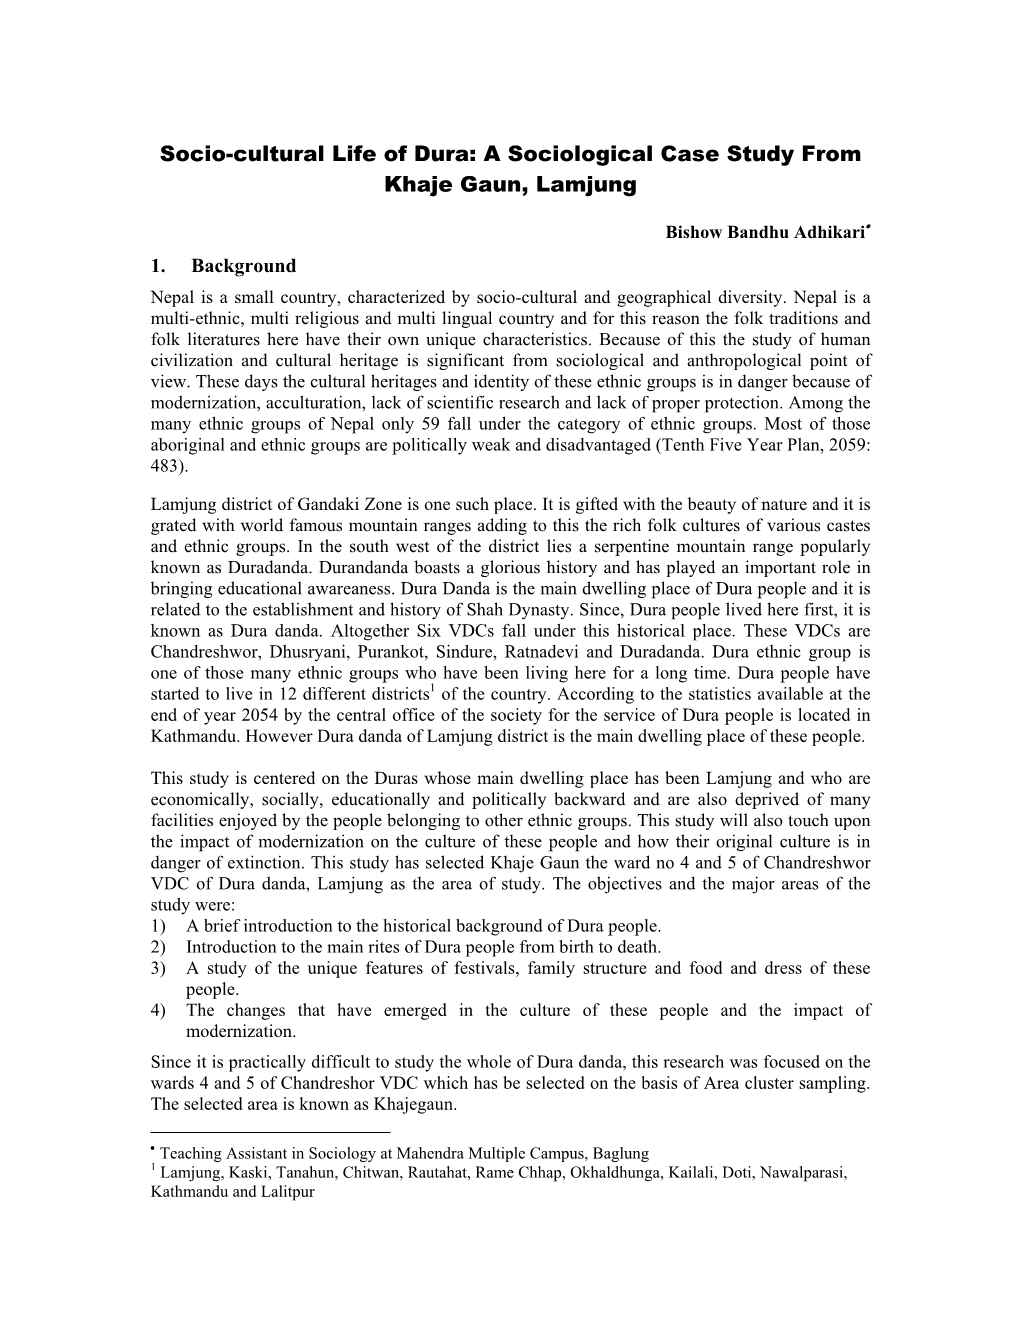 Socio-Cultural Life of Dura: a Sociological Case Study from Khaje Gaun, Lamjung